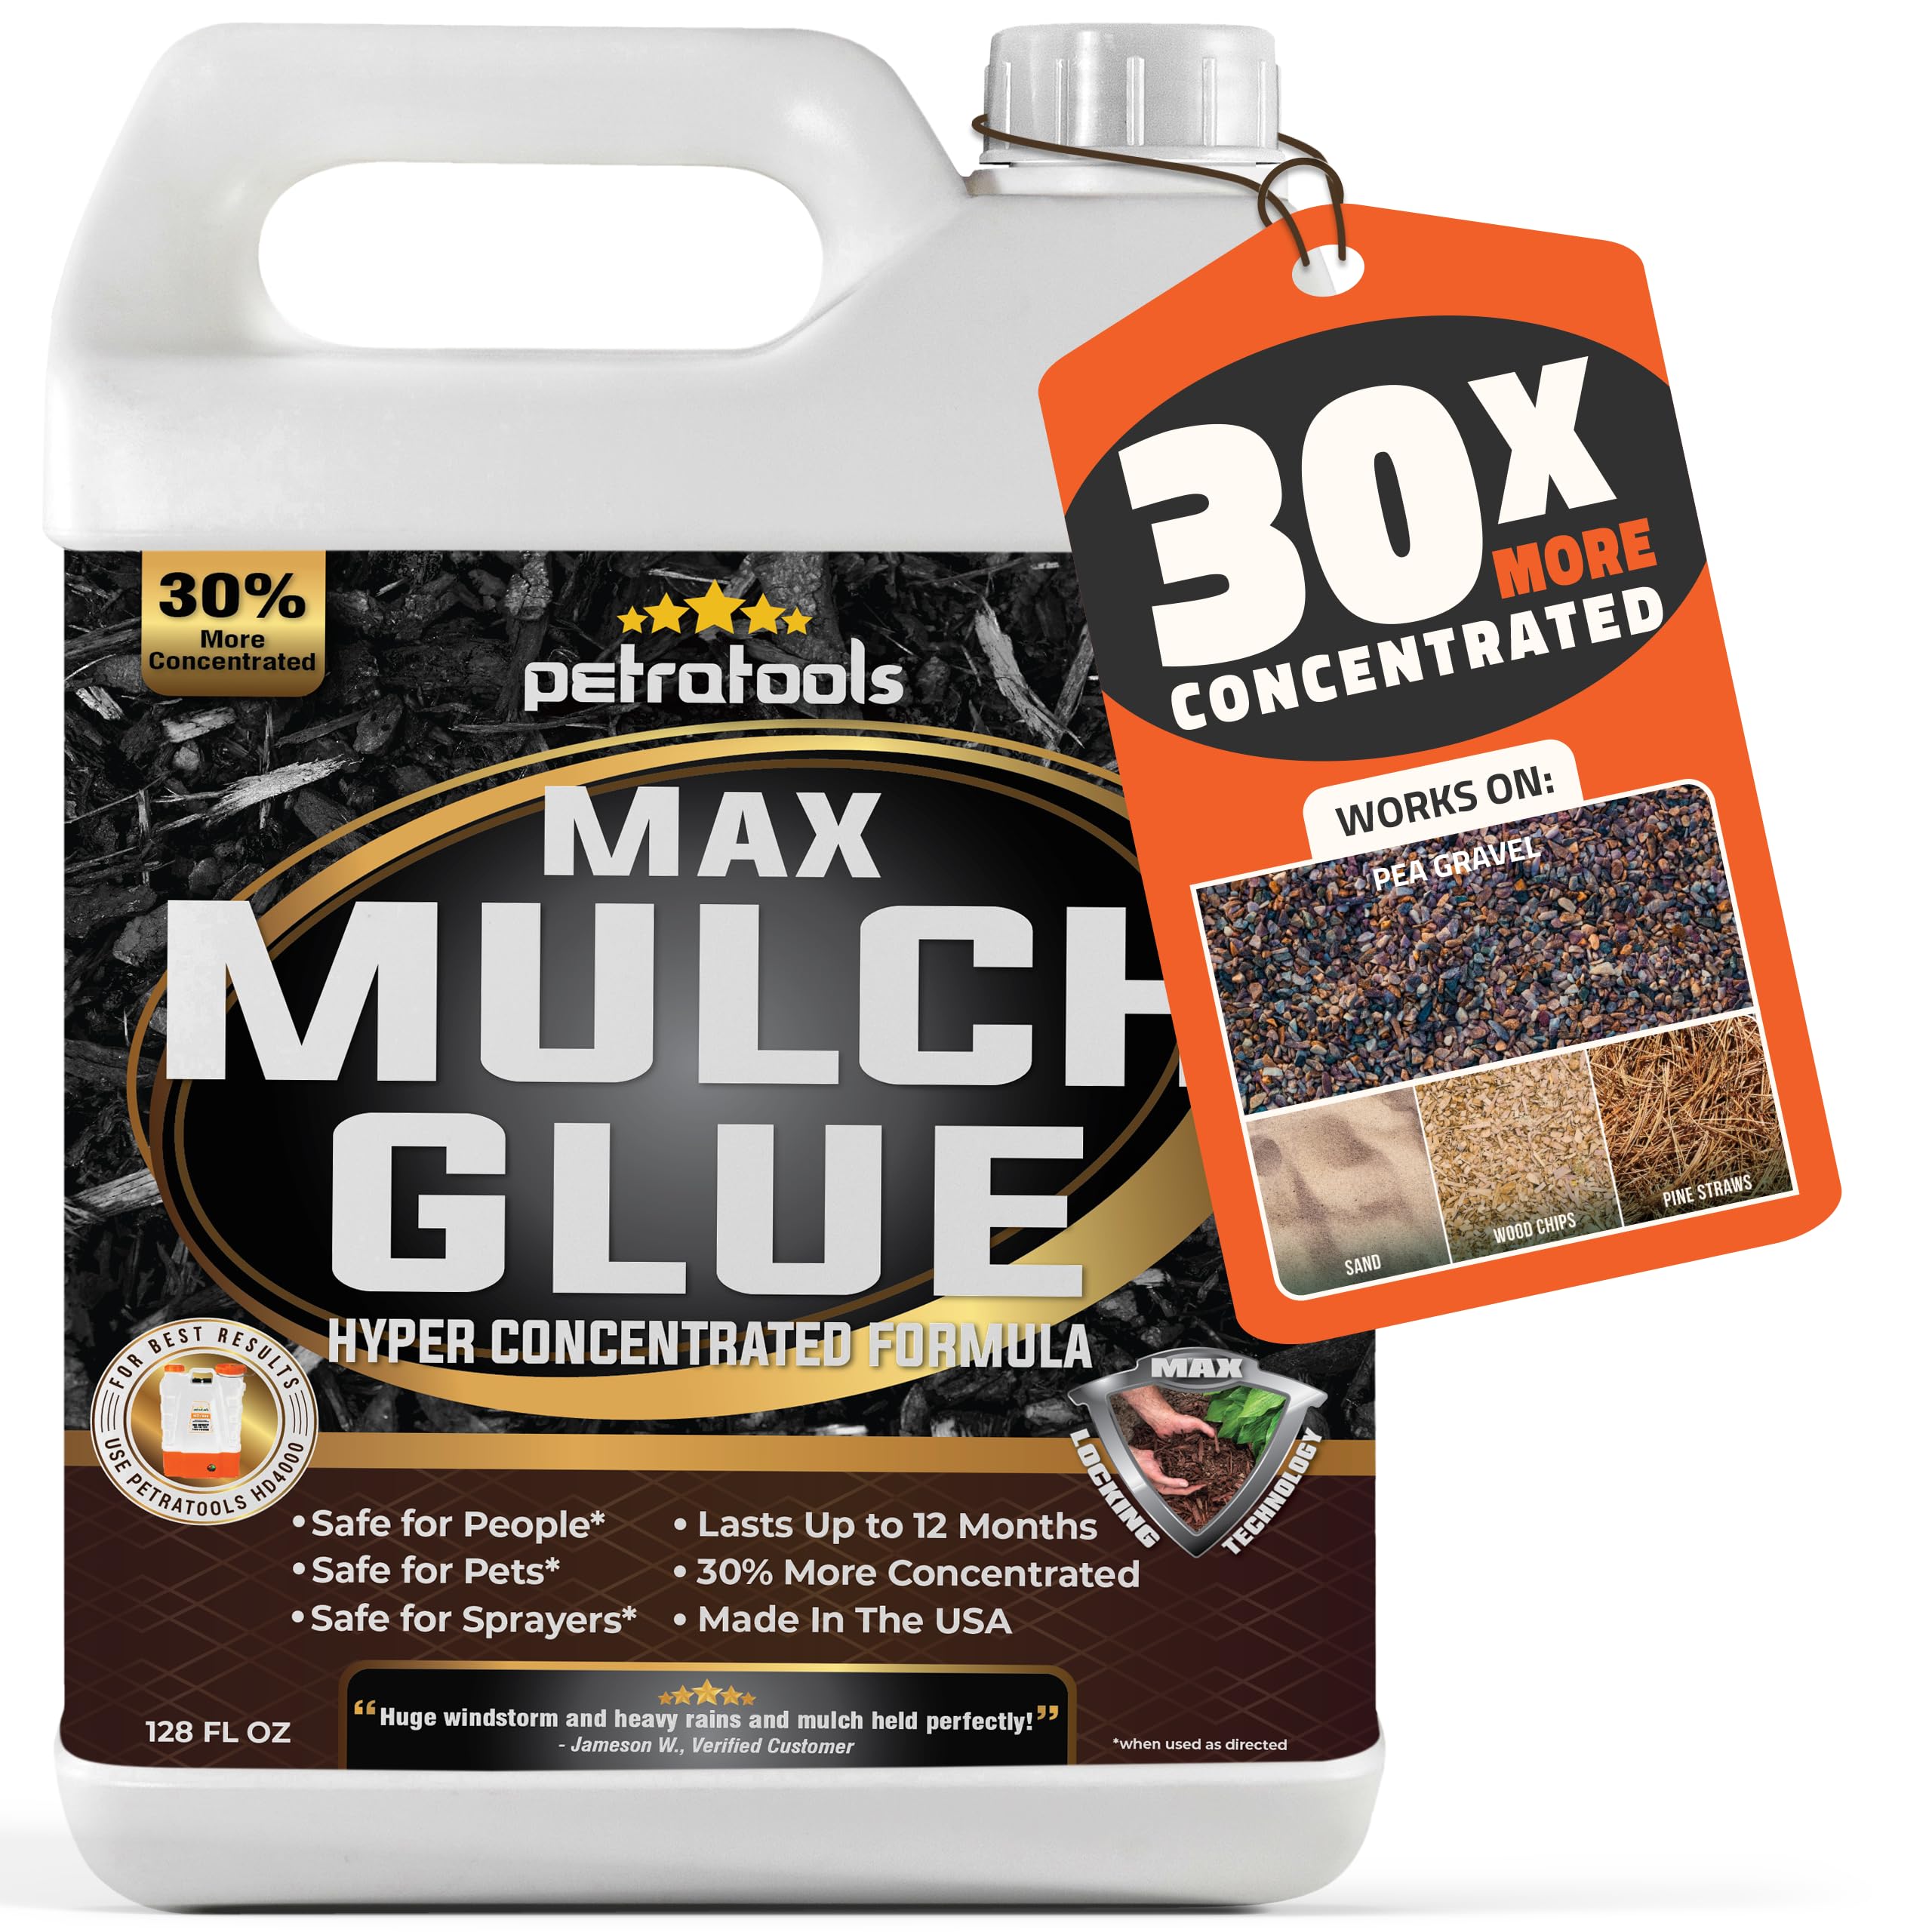 Max Mulch Glue on Amazon